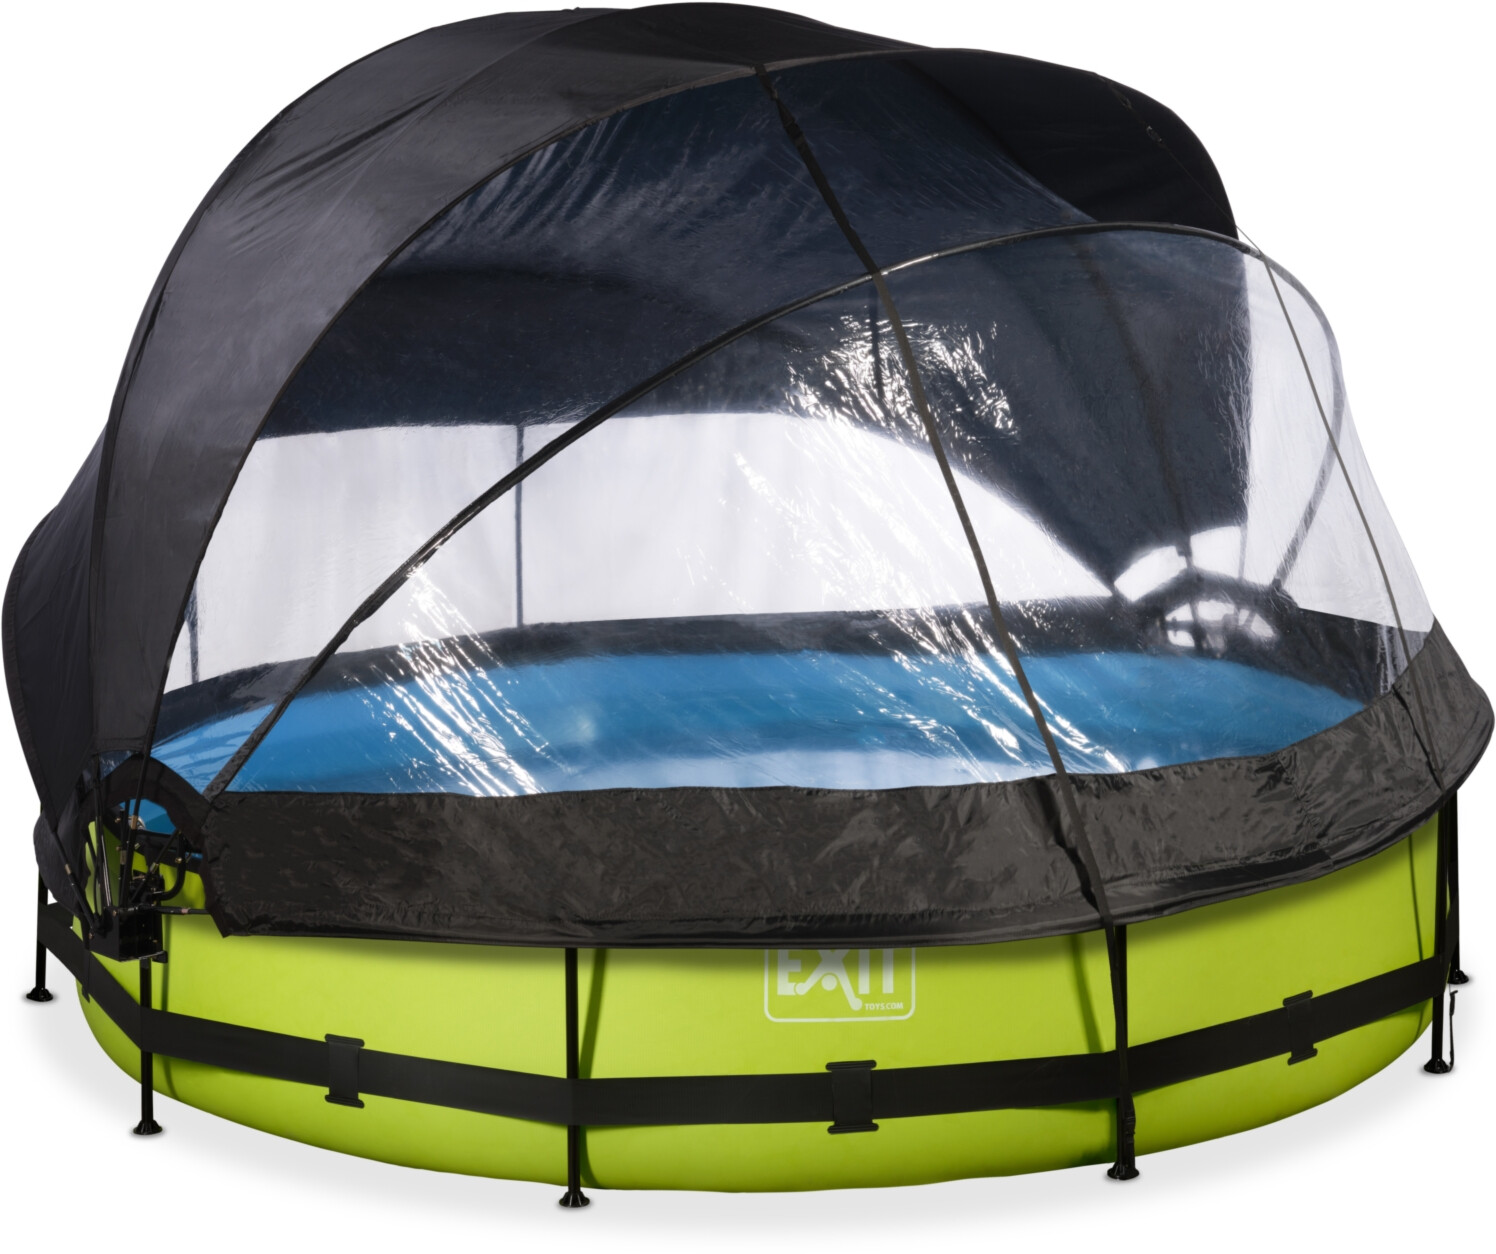 Scaun Locui jurnal trampoliini teltta înceta Imobiliar Mobil